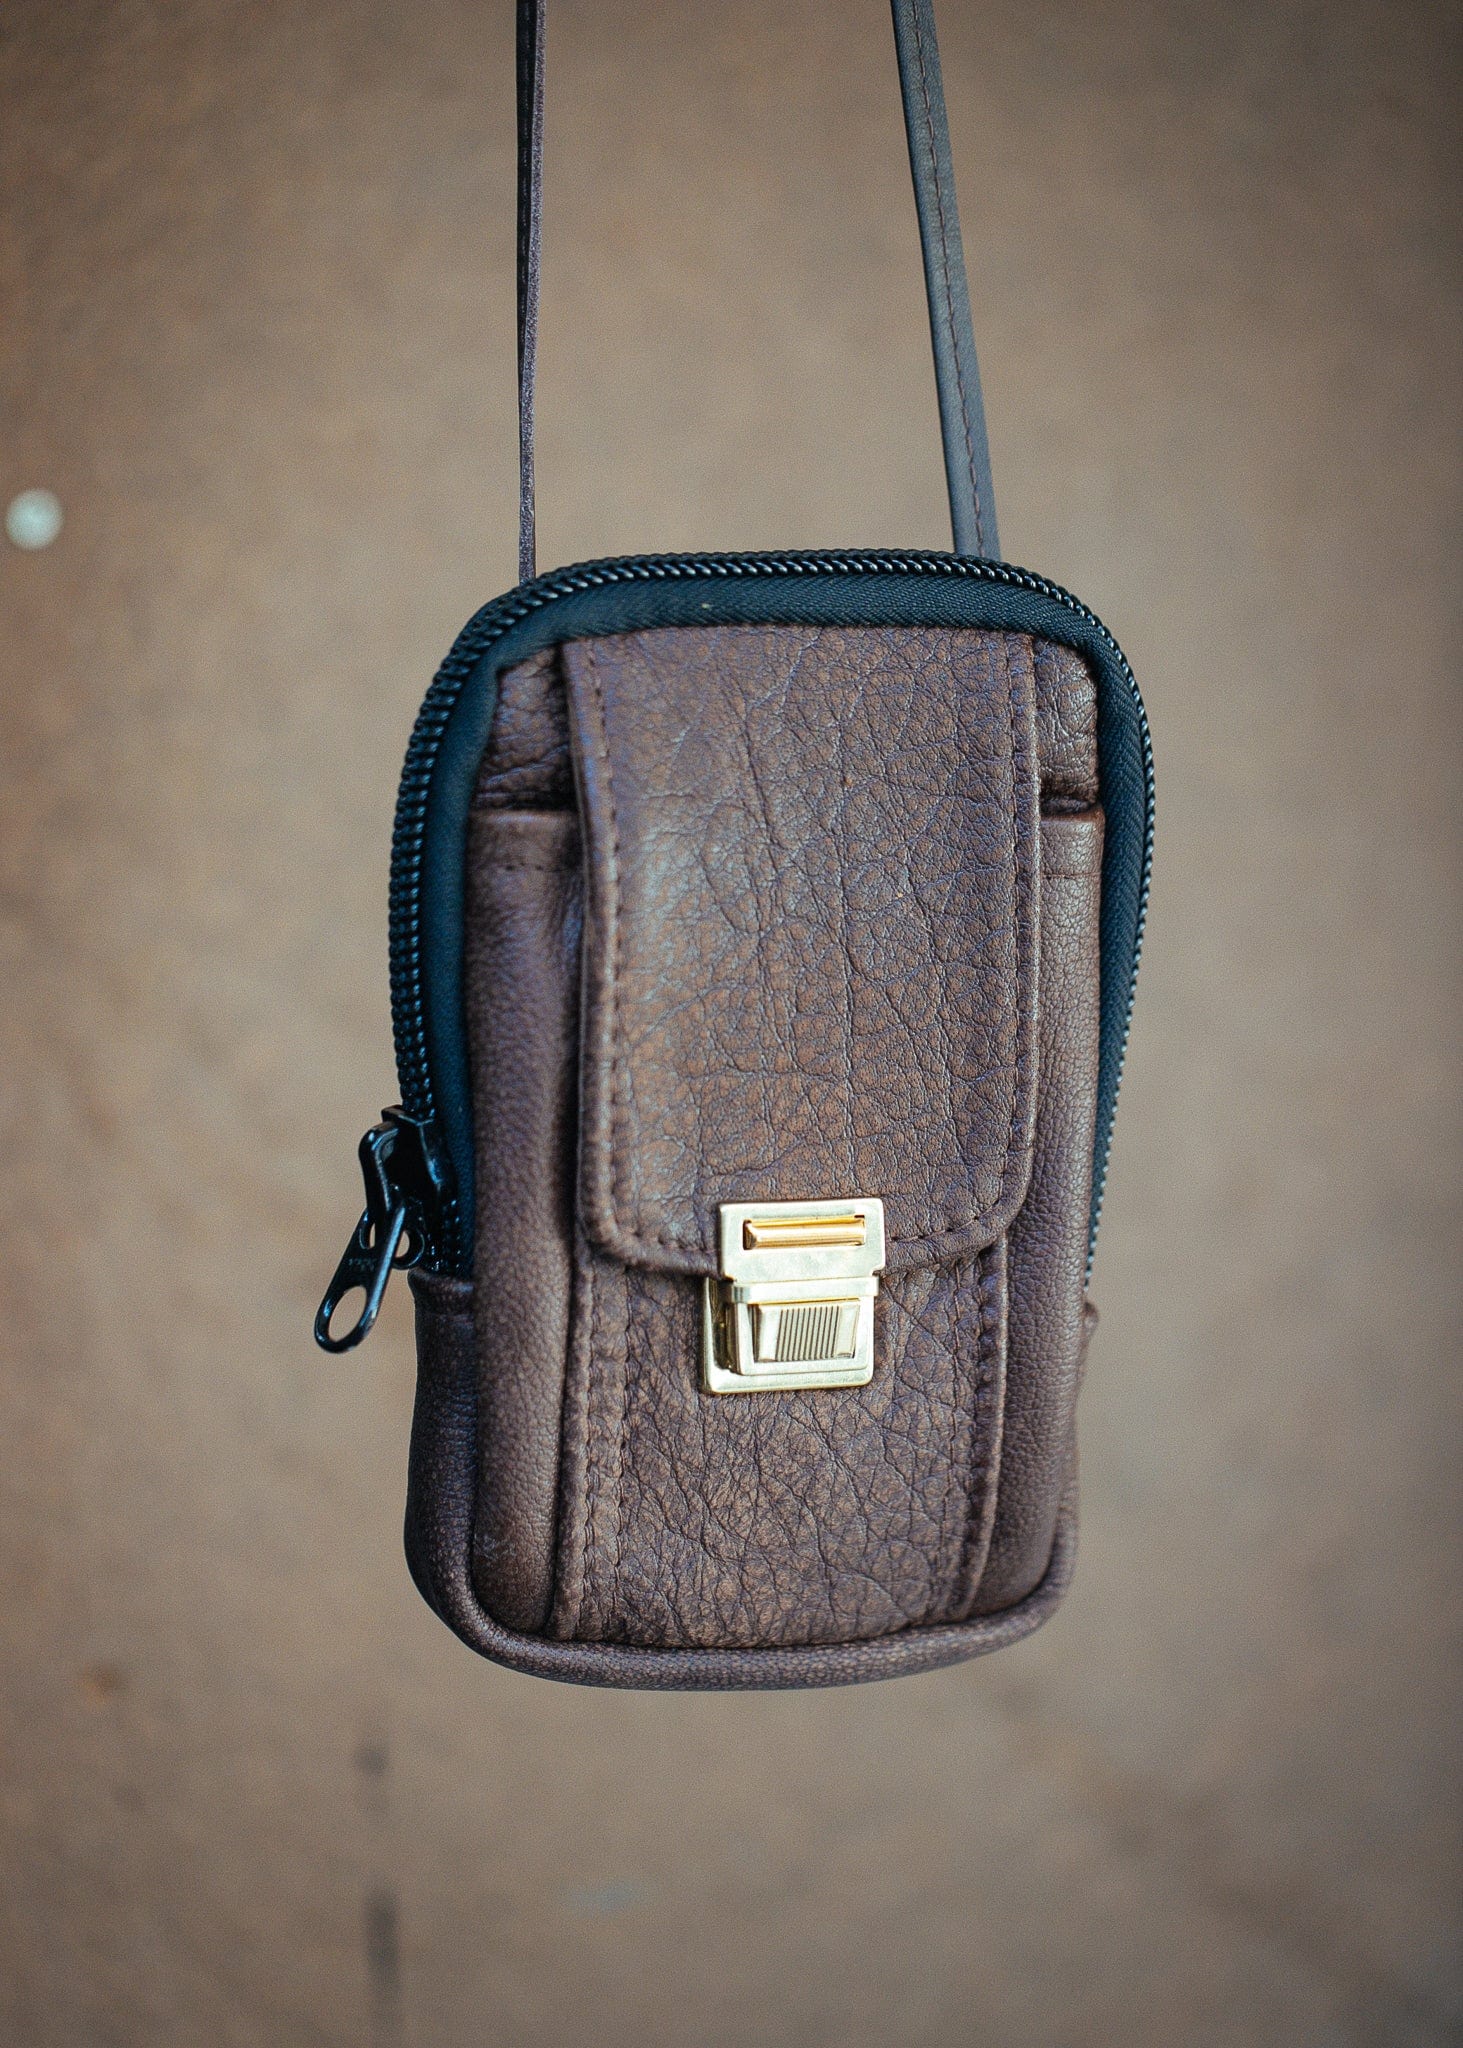 The Real McCaul Back Packs Paul Utility Bag Australian Made Australian Owned Leather ManBag Crossover Backpack Australian Made